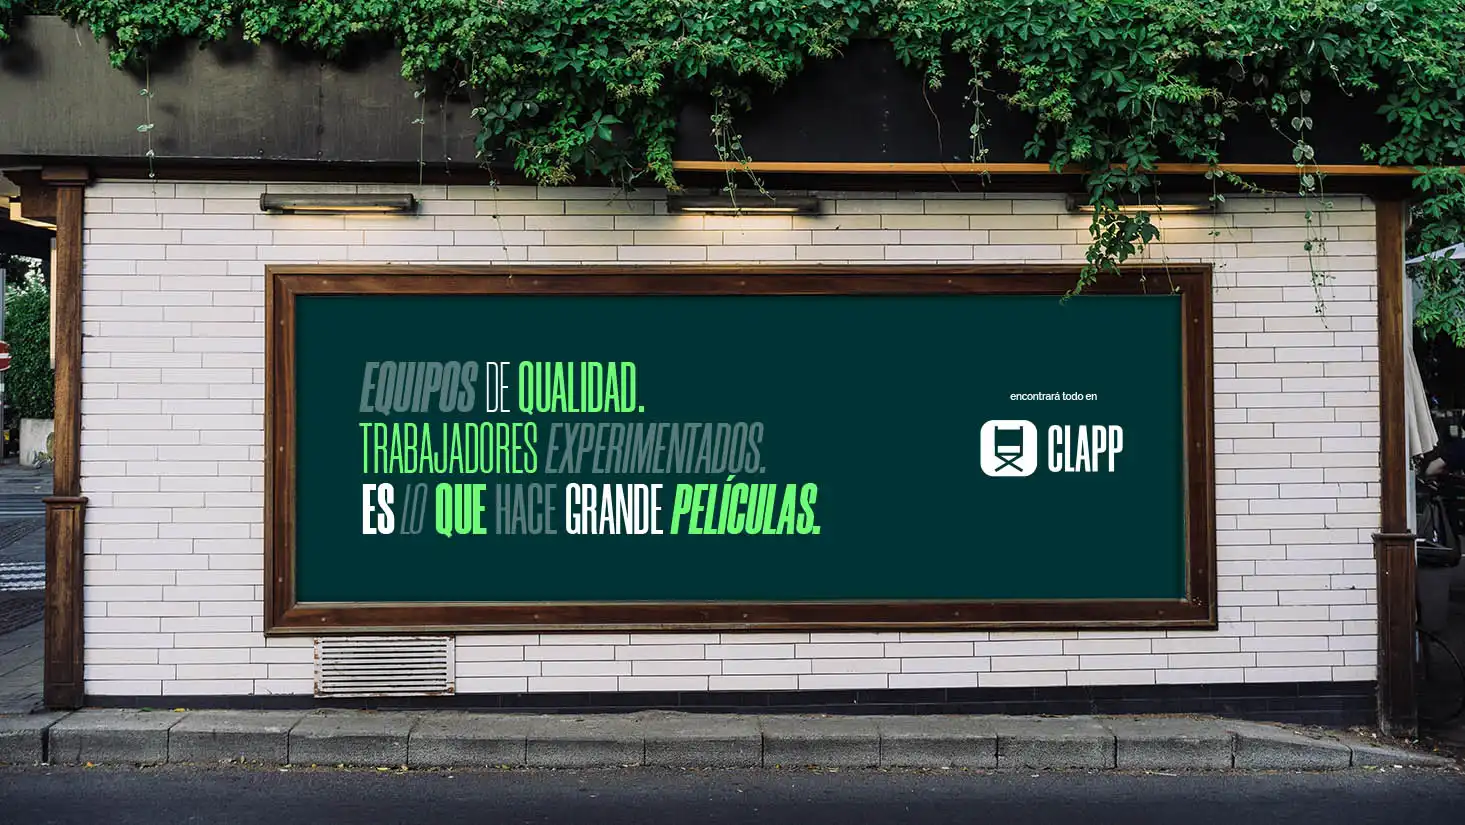 Horizontal billboard design for Clapp